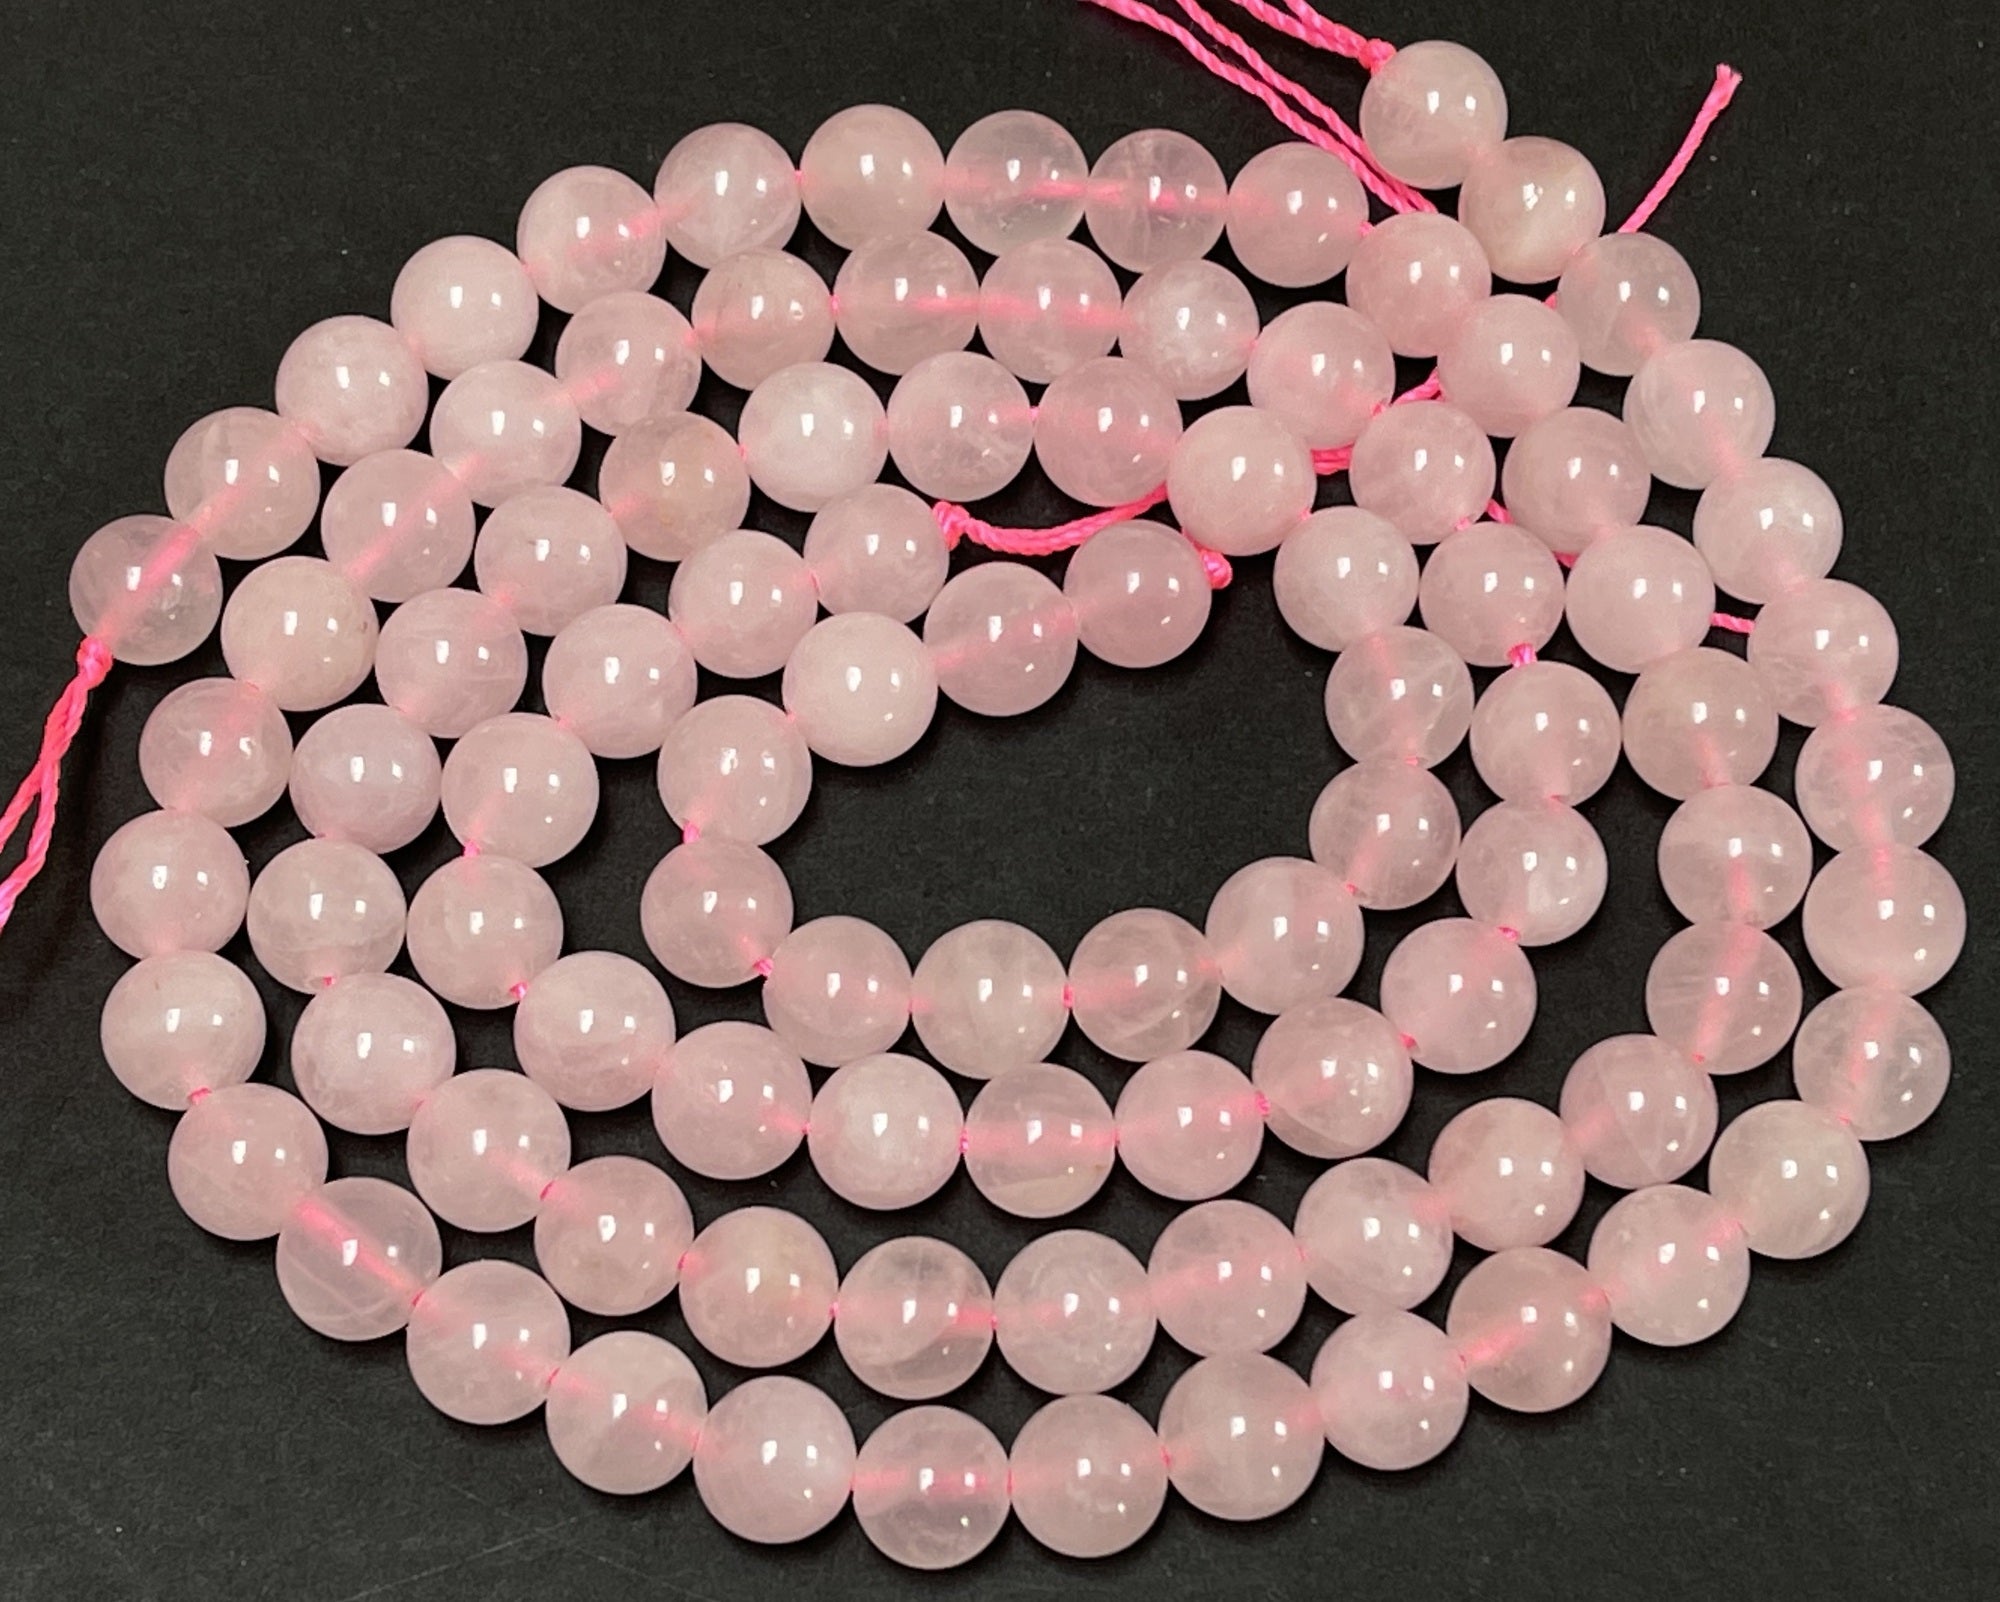 Rose Quartz 8mm round natural gemstone beads 15.5" strand